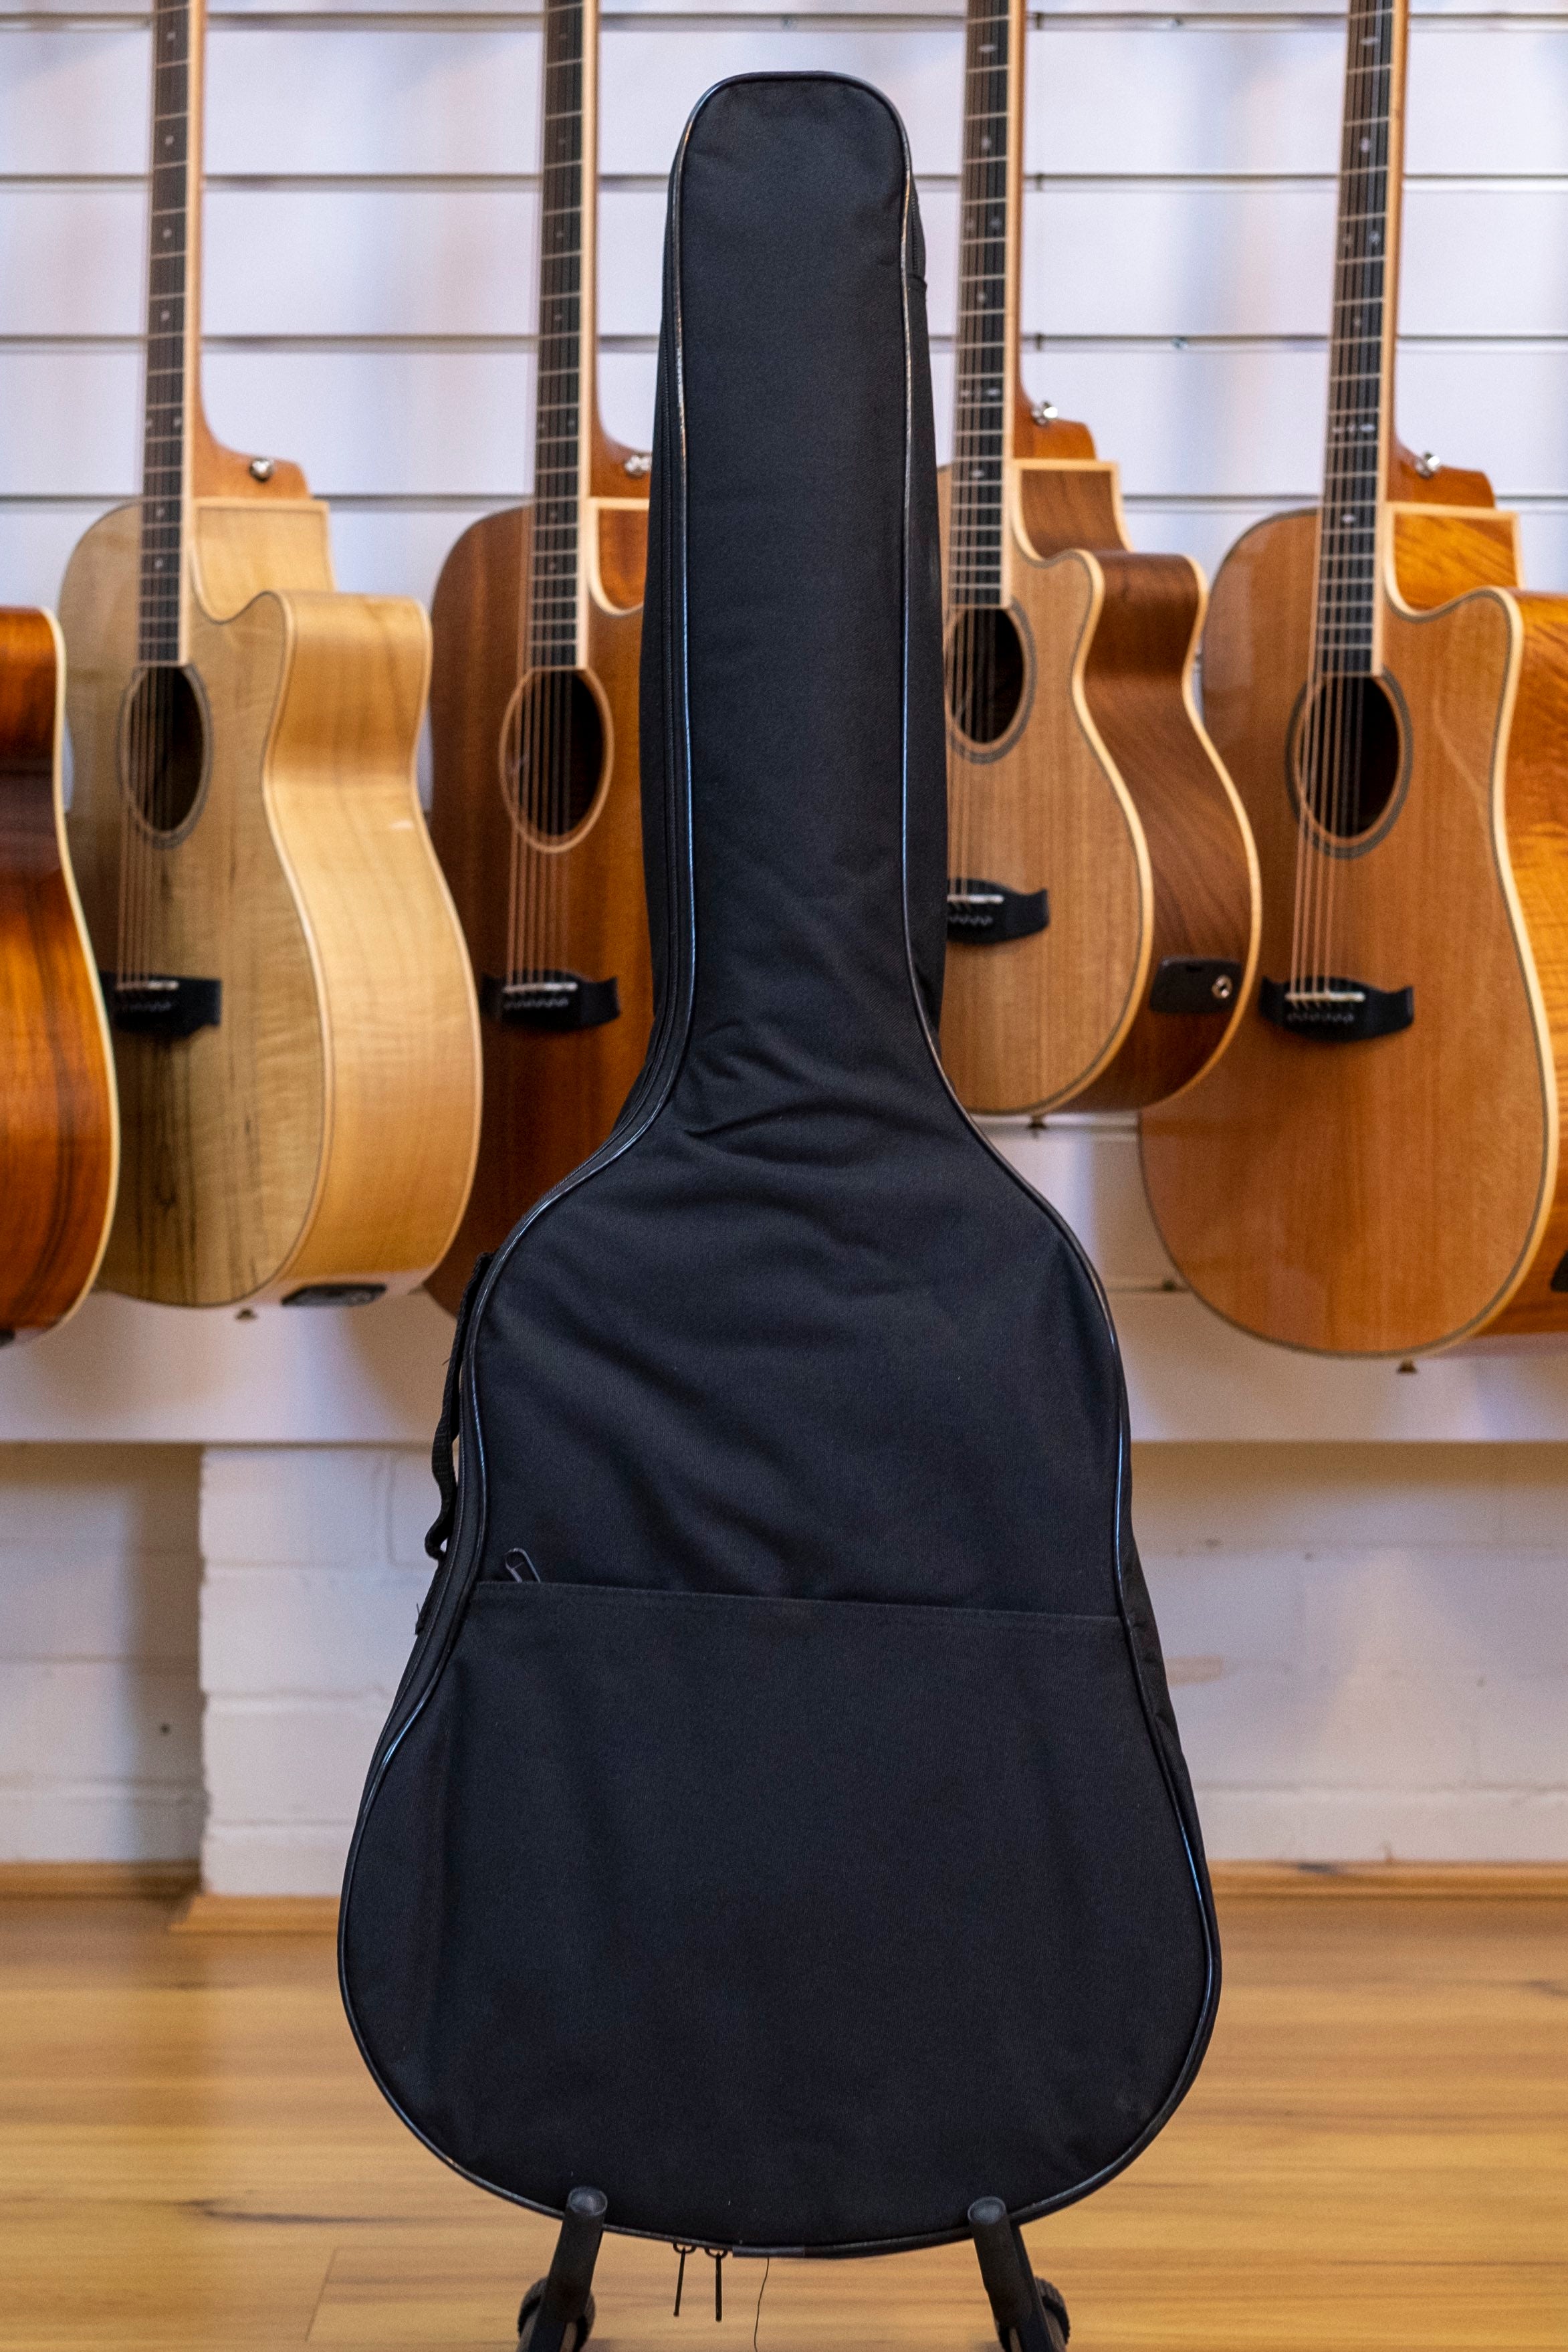 Katoh Student Series MCG18 Classical Guitar with Bag